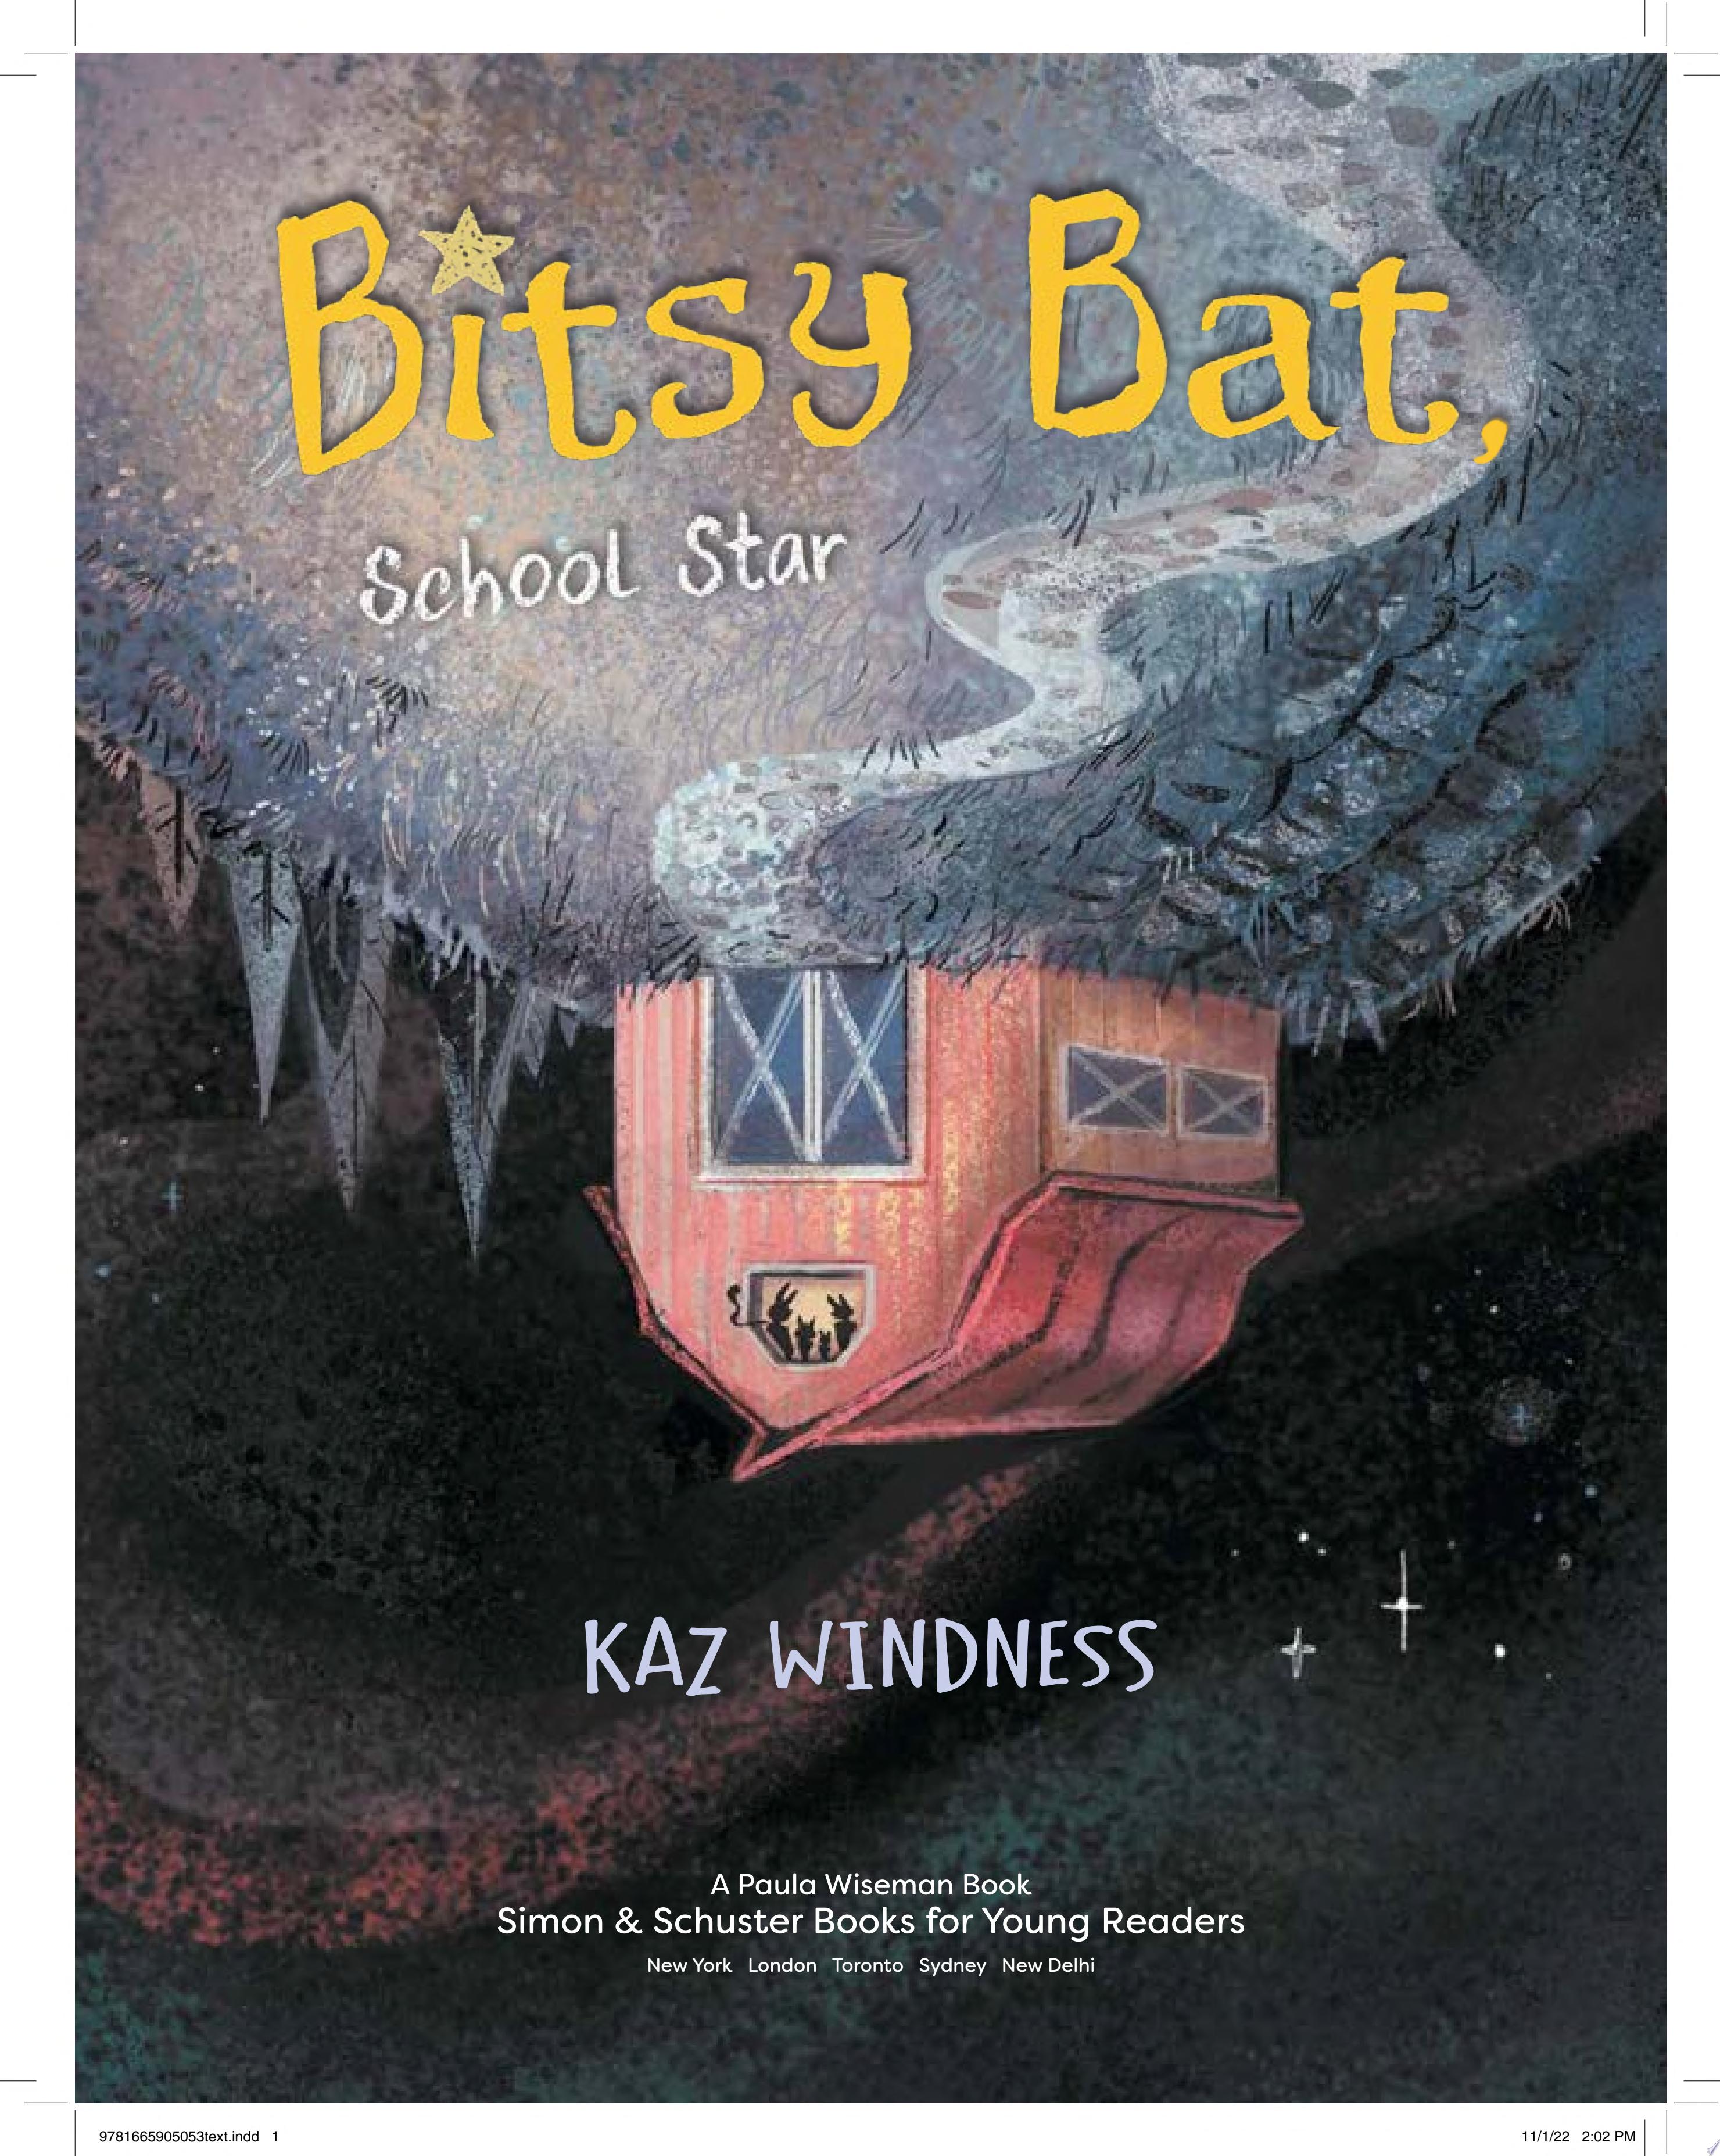 Image for "Bitsy Bat, School Star"